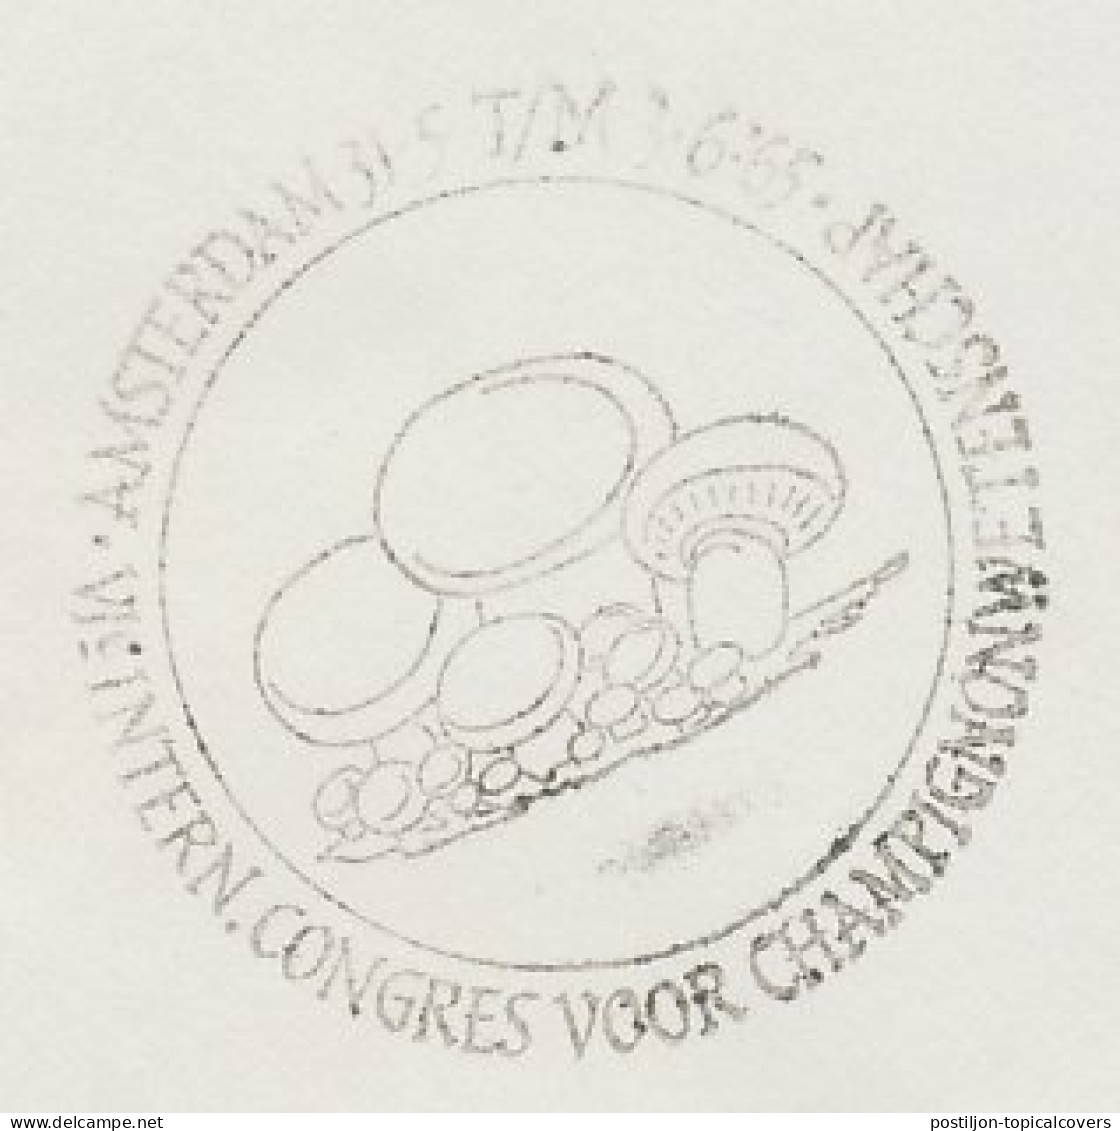 Cover / Postmark Netherlands 1965 Mushroom Congress - Pilze